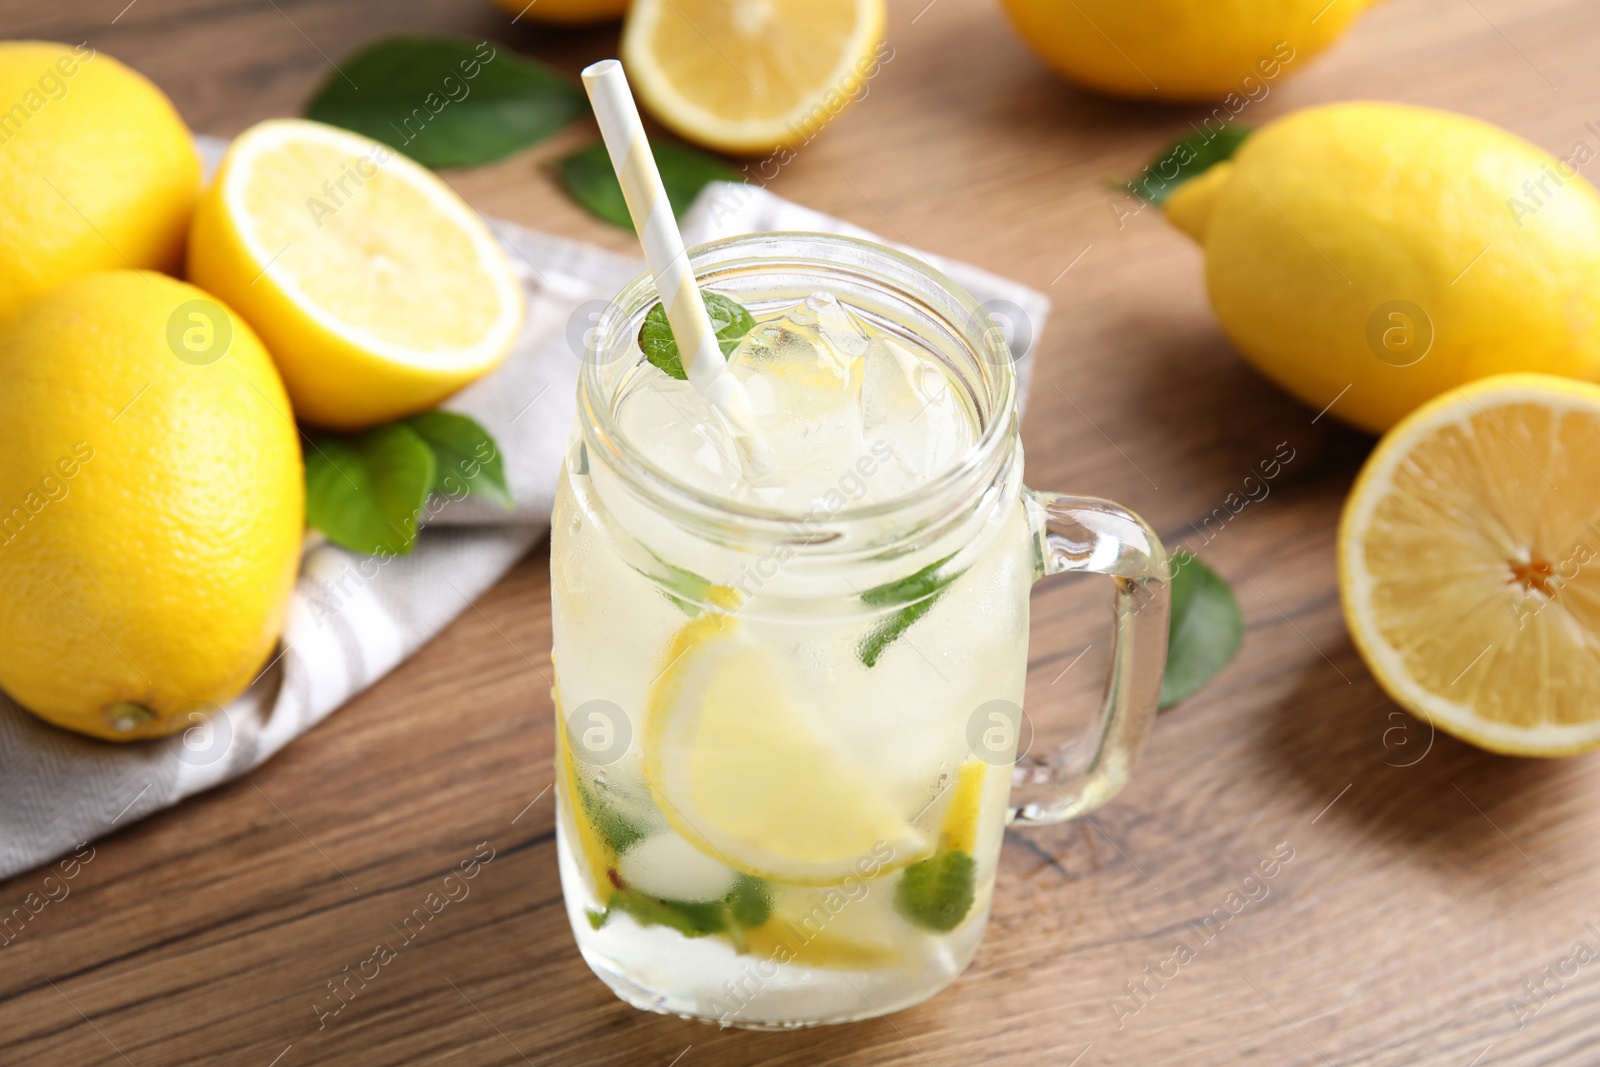 Photo of Mason jar of cold lemonade on wooden table